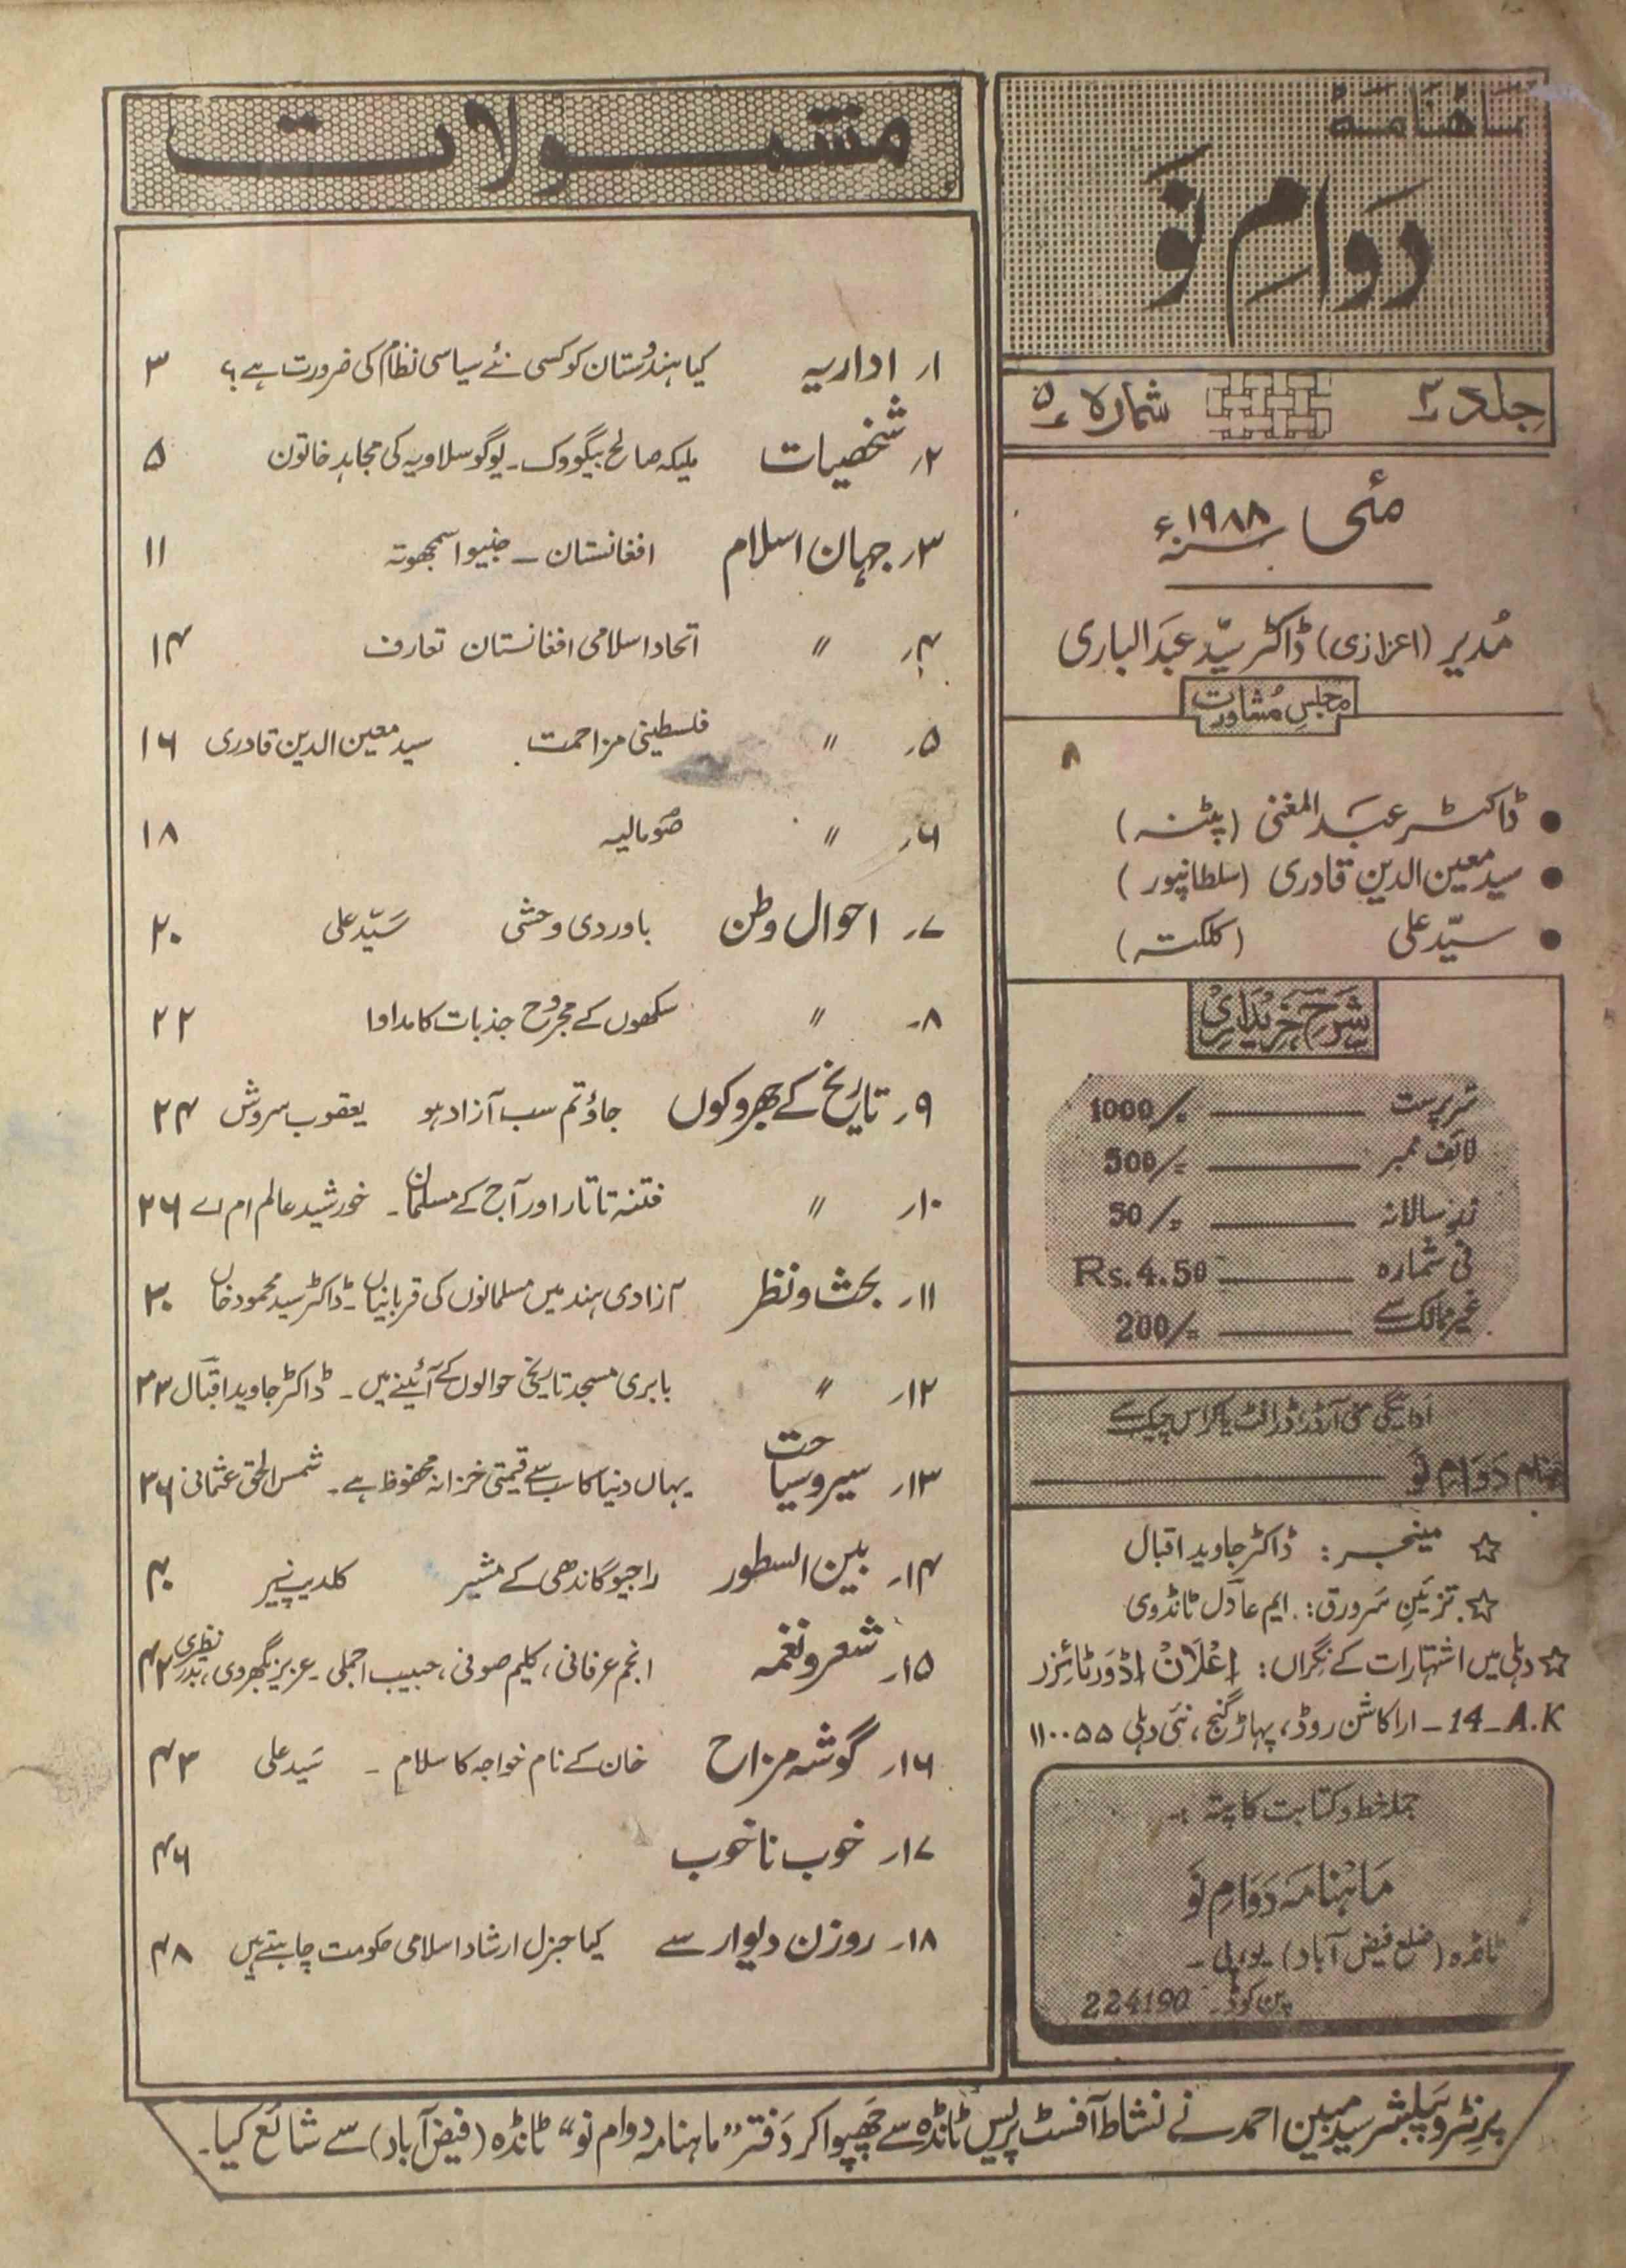 Dawam-e-nau-shumara-number-005-syed-abdul-bari-magazines